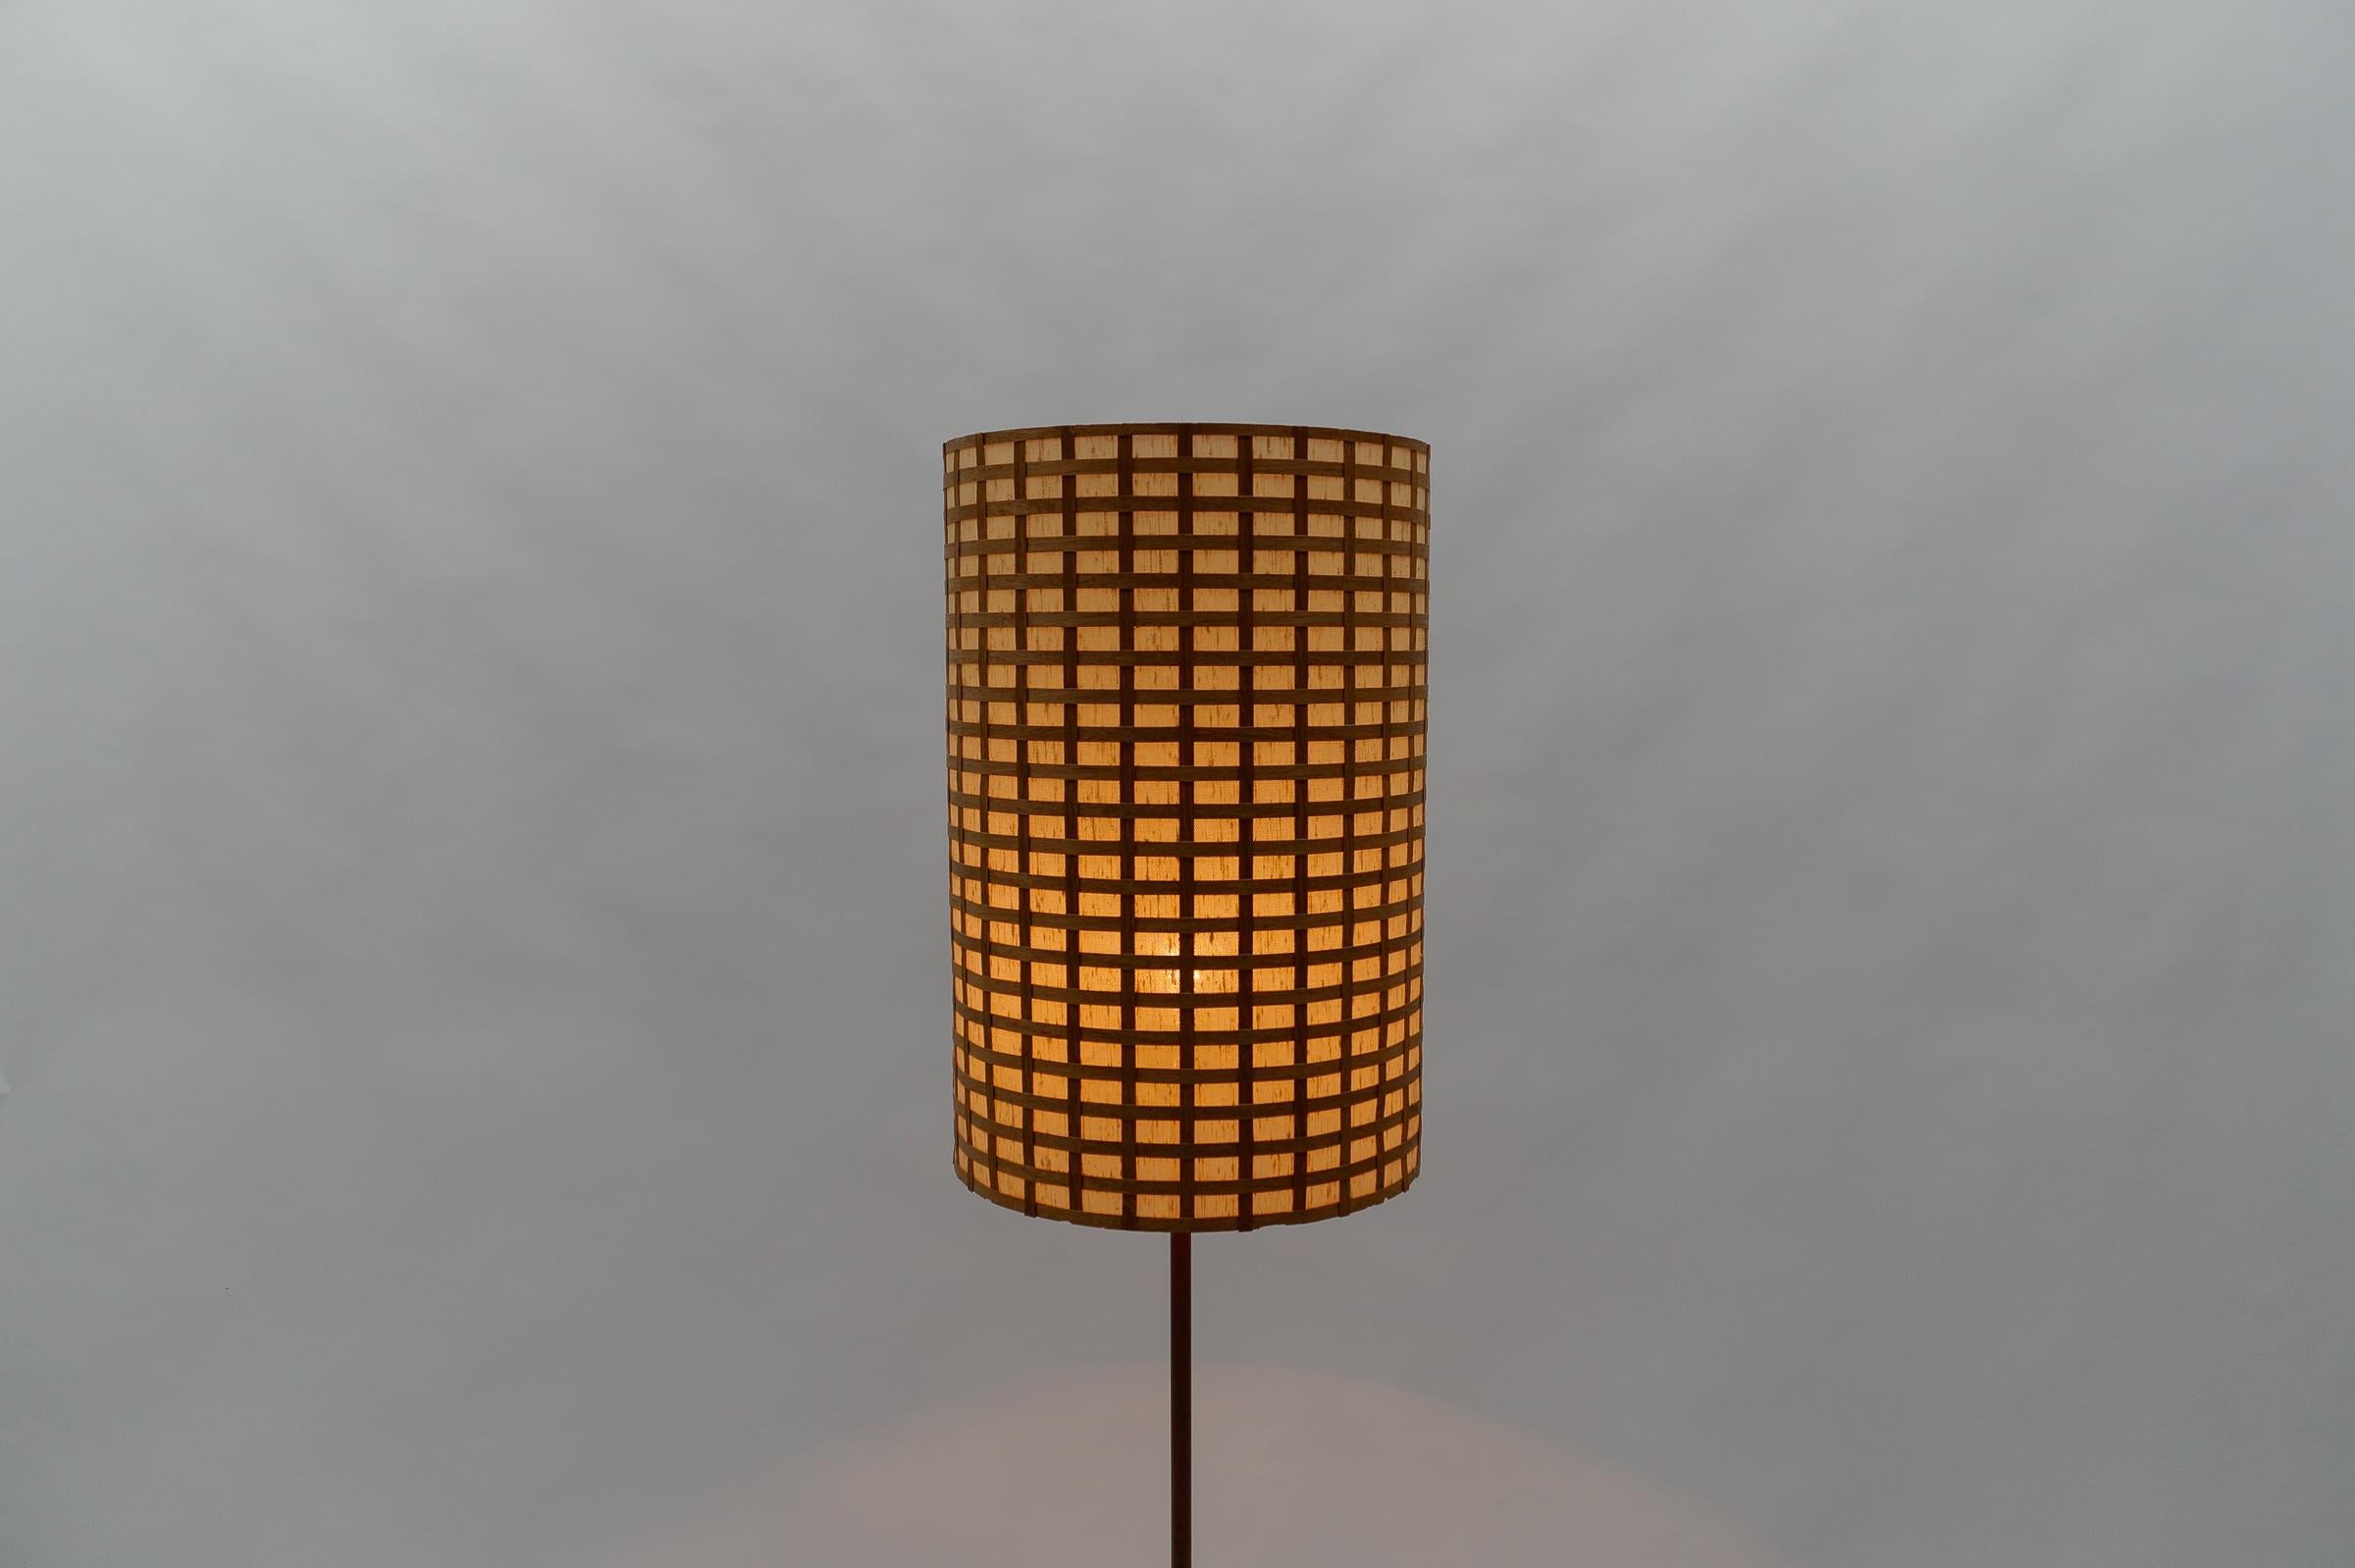  Mid-Century Modern Floor Lamp in Brass and Teak from Temde, 1960s Switzerland For Sale 1